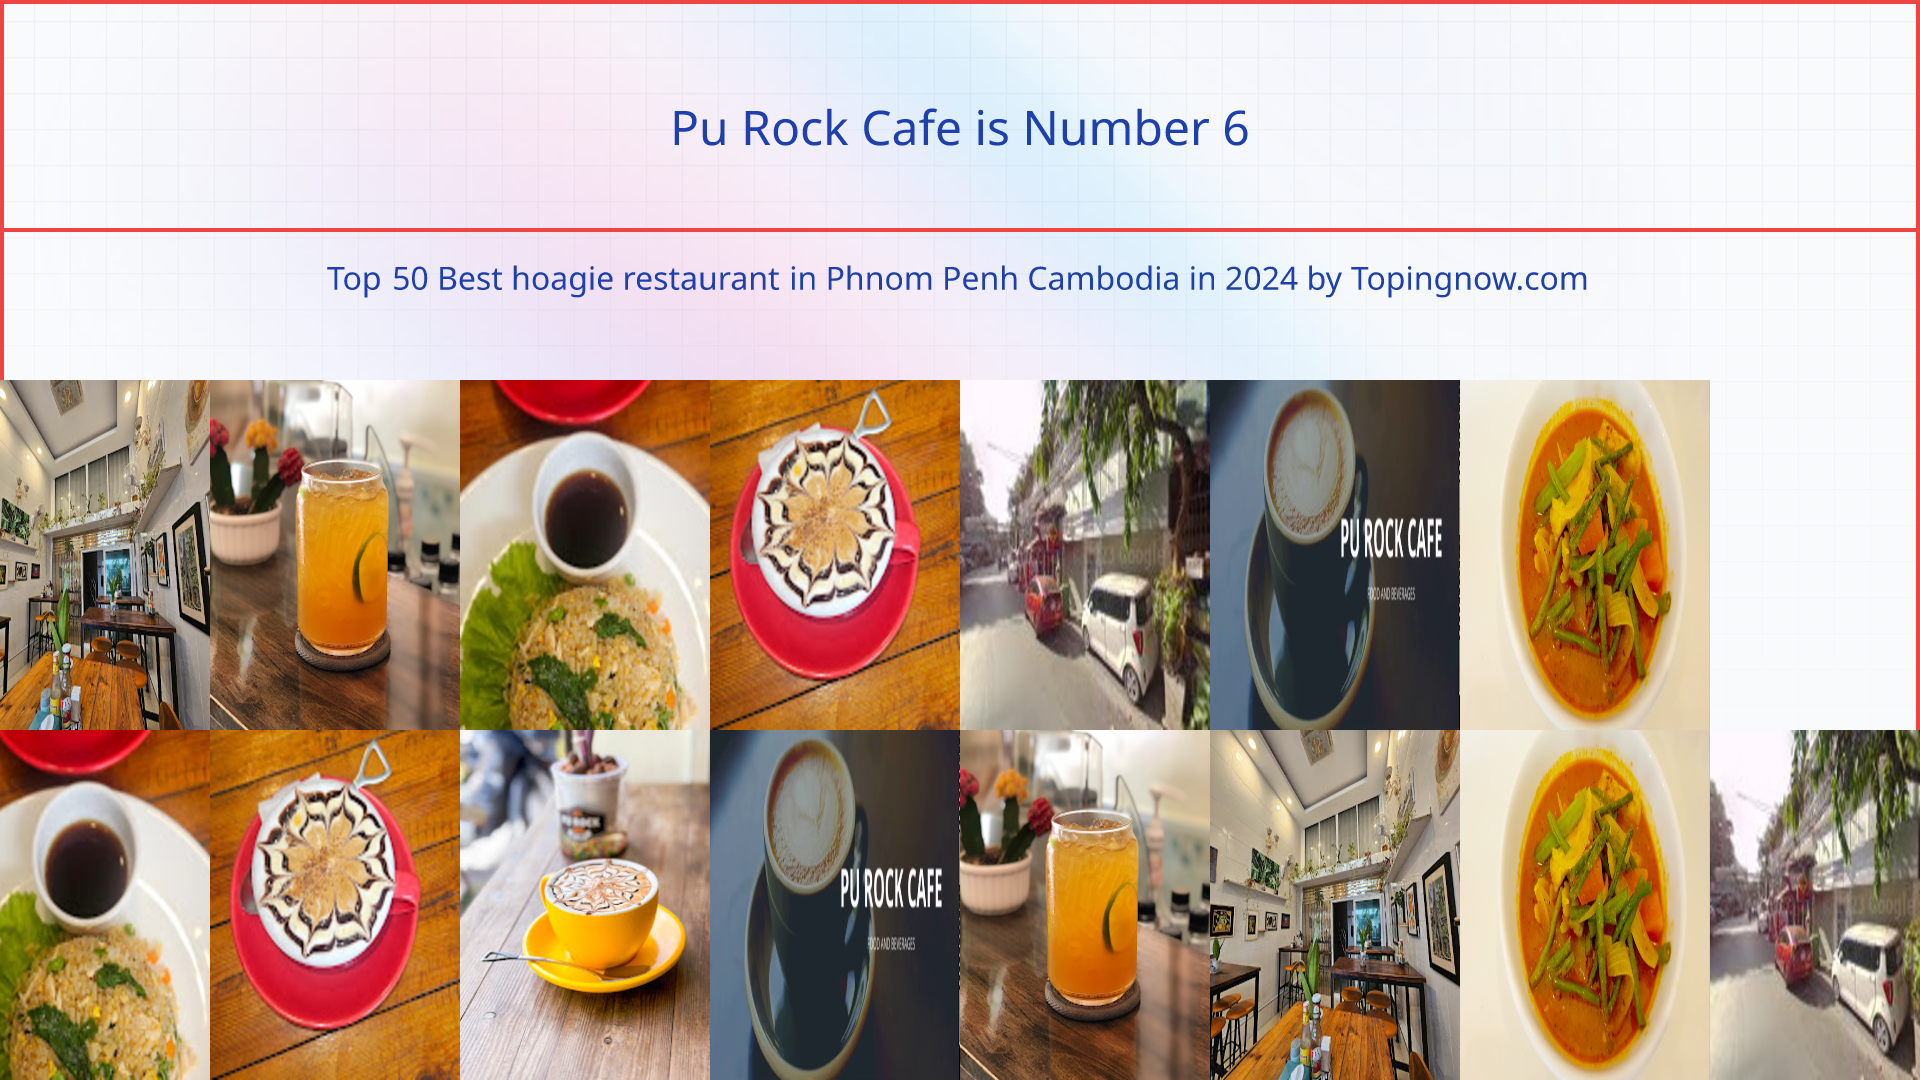 Pu Rock Cafe: Top 50 Best hoagie restaurant in Phnom Penh Cambodia in 2024